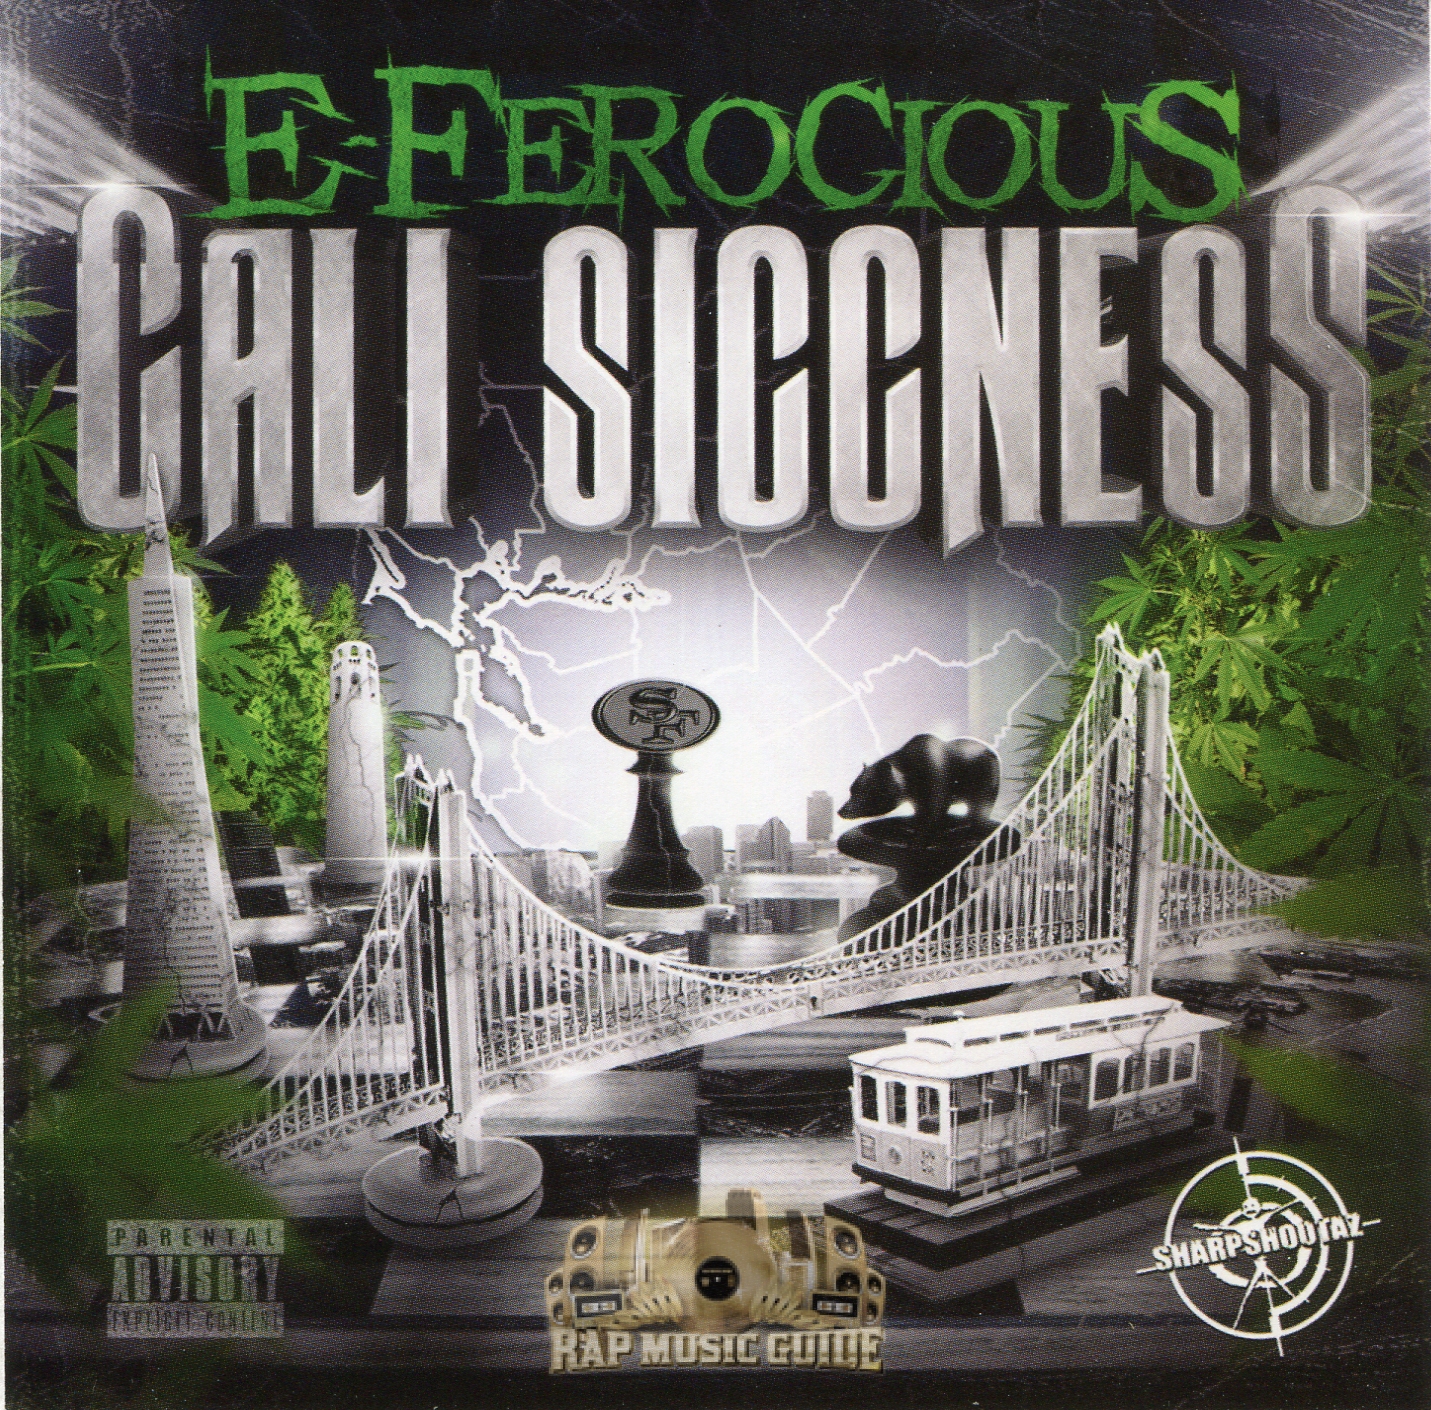 E-Ferocious - Cali Soldiers: CD | Rap Music Guide